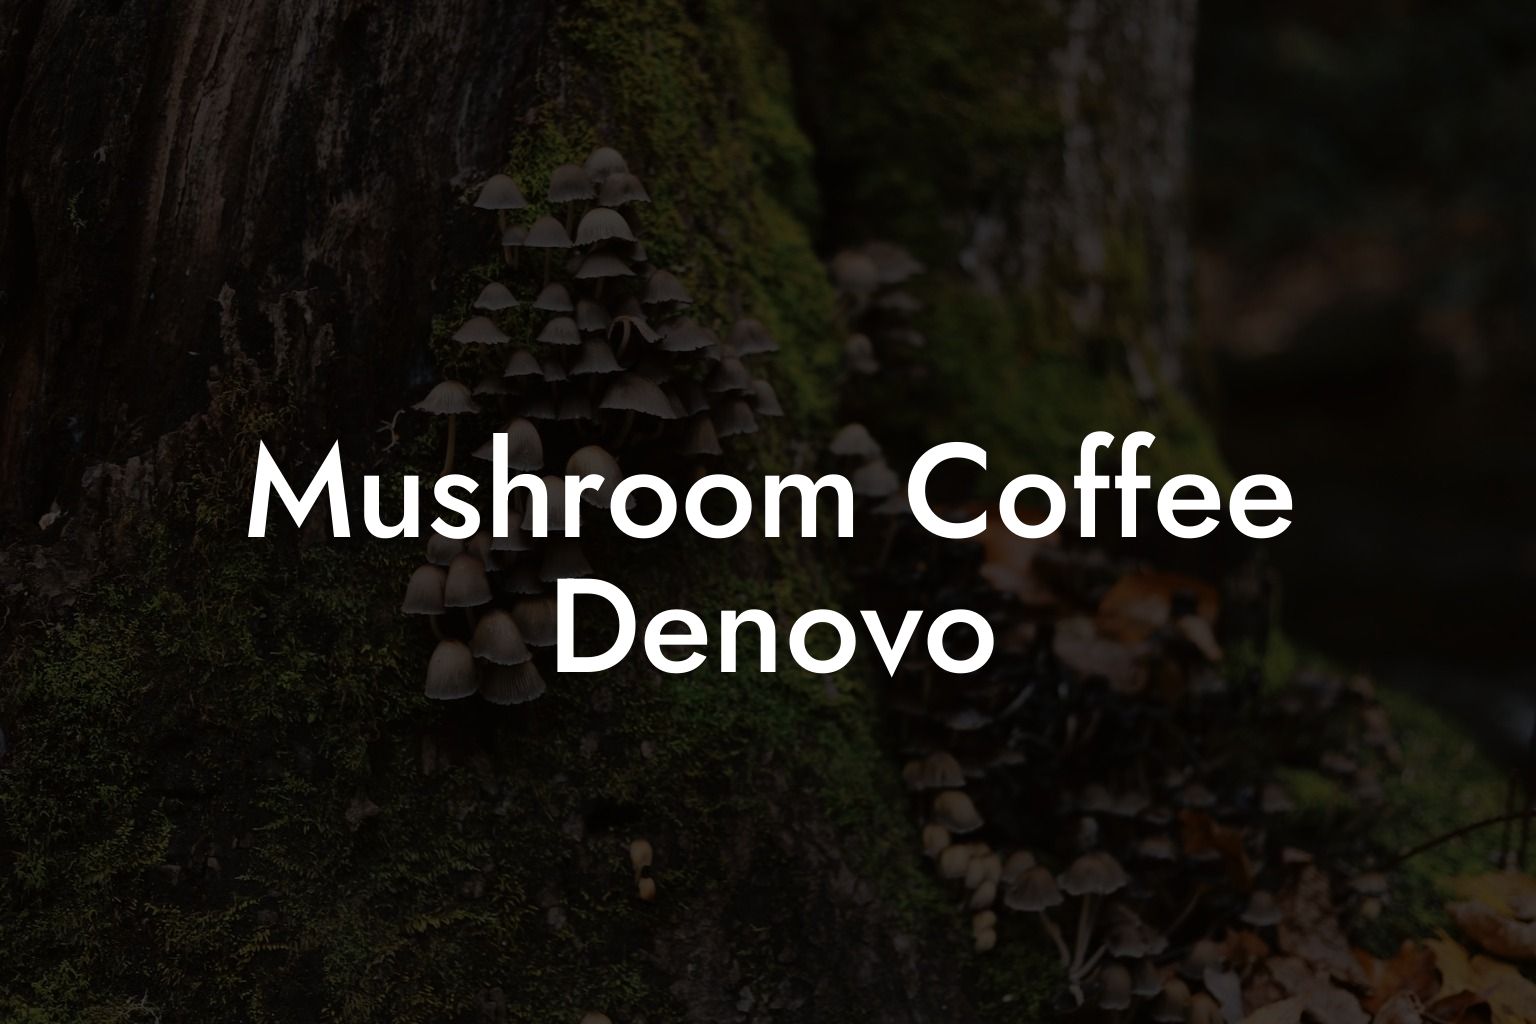 Mushroom Coffee Denovo